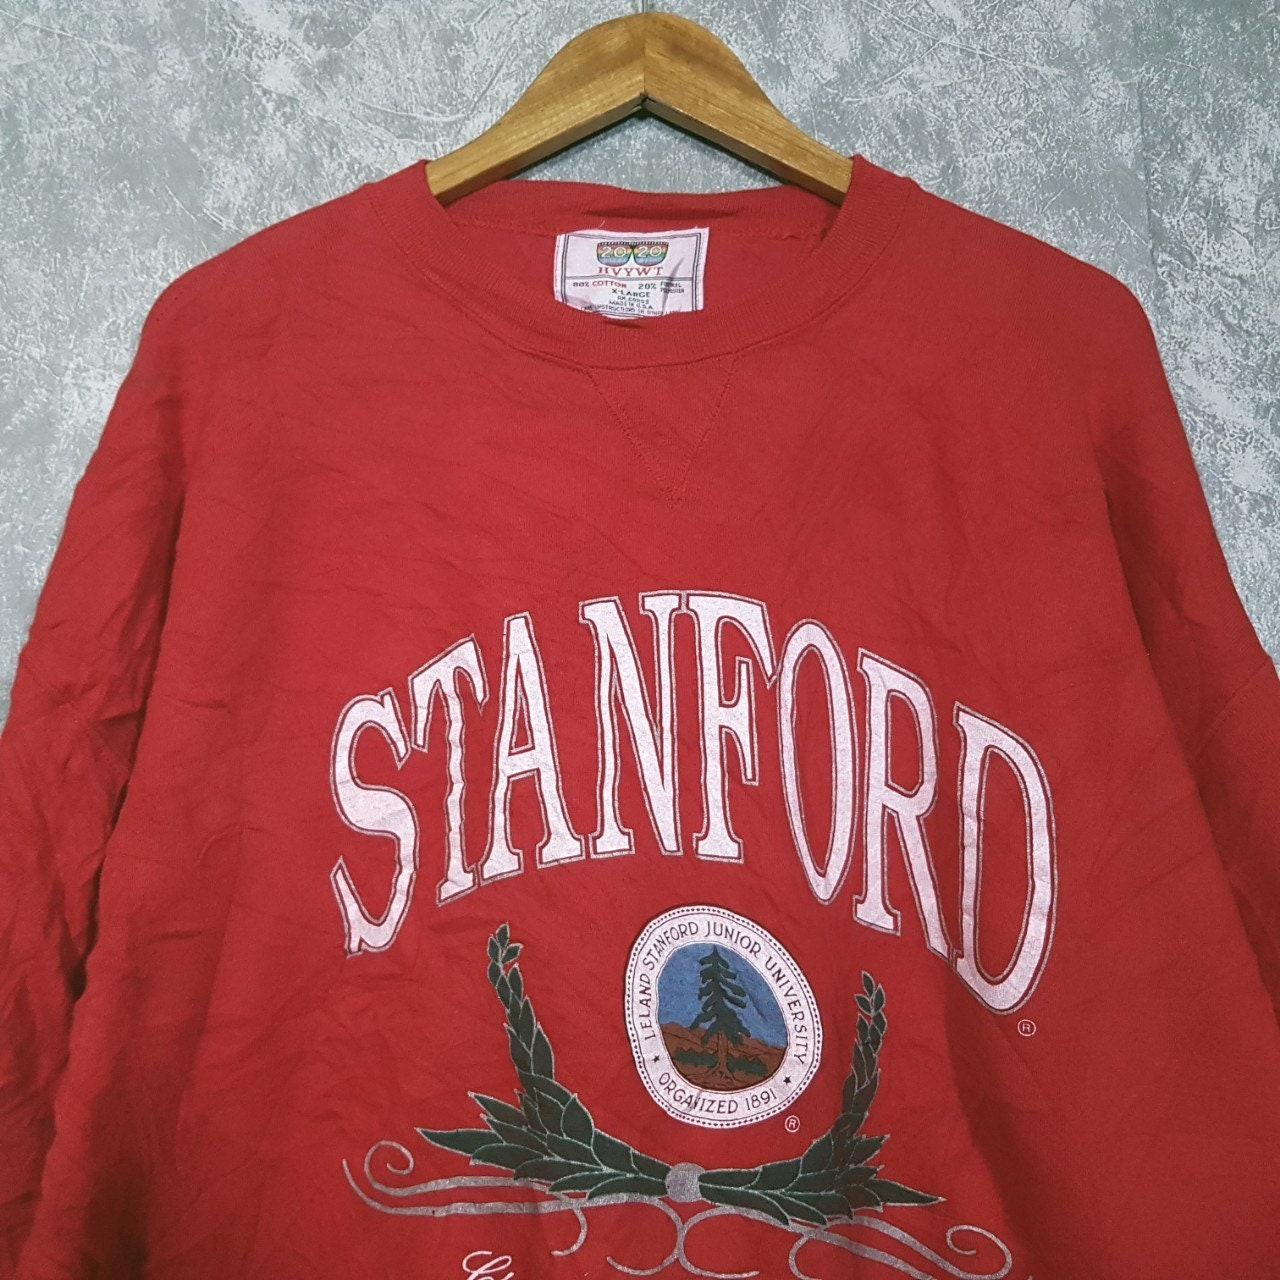 Vintage Stanford University Sweater | Etsy